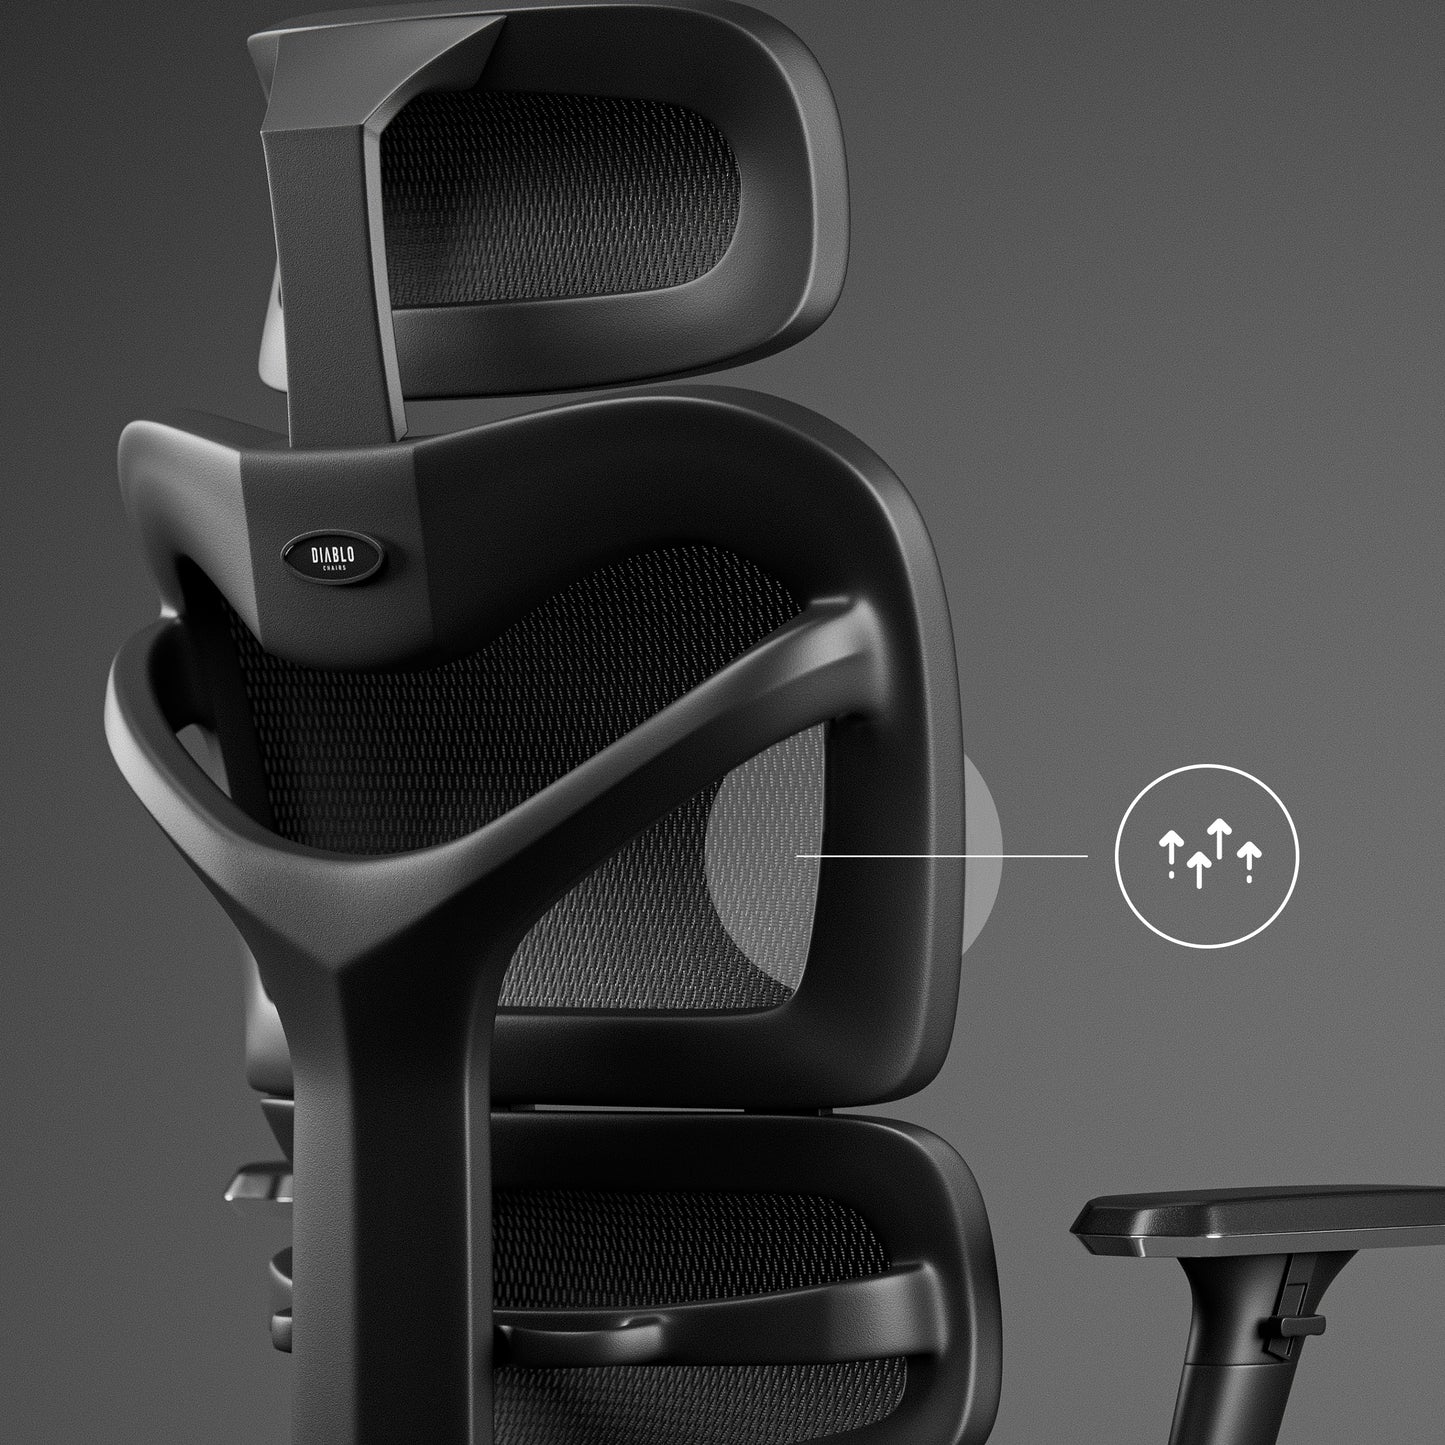 Fotel ergonomiczny DIABLO V-COMMANDER czarno-szary